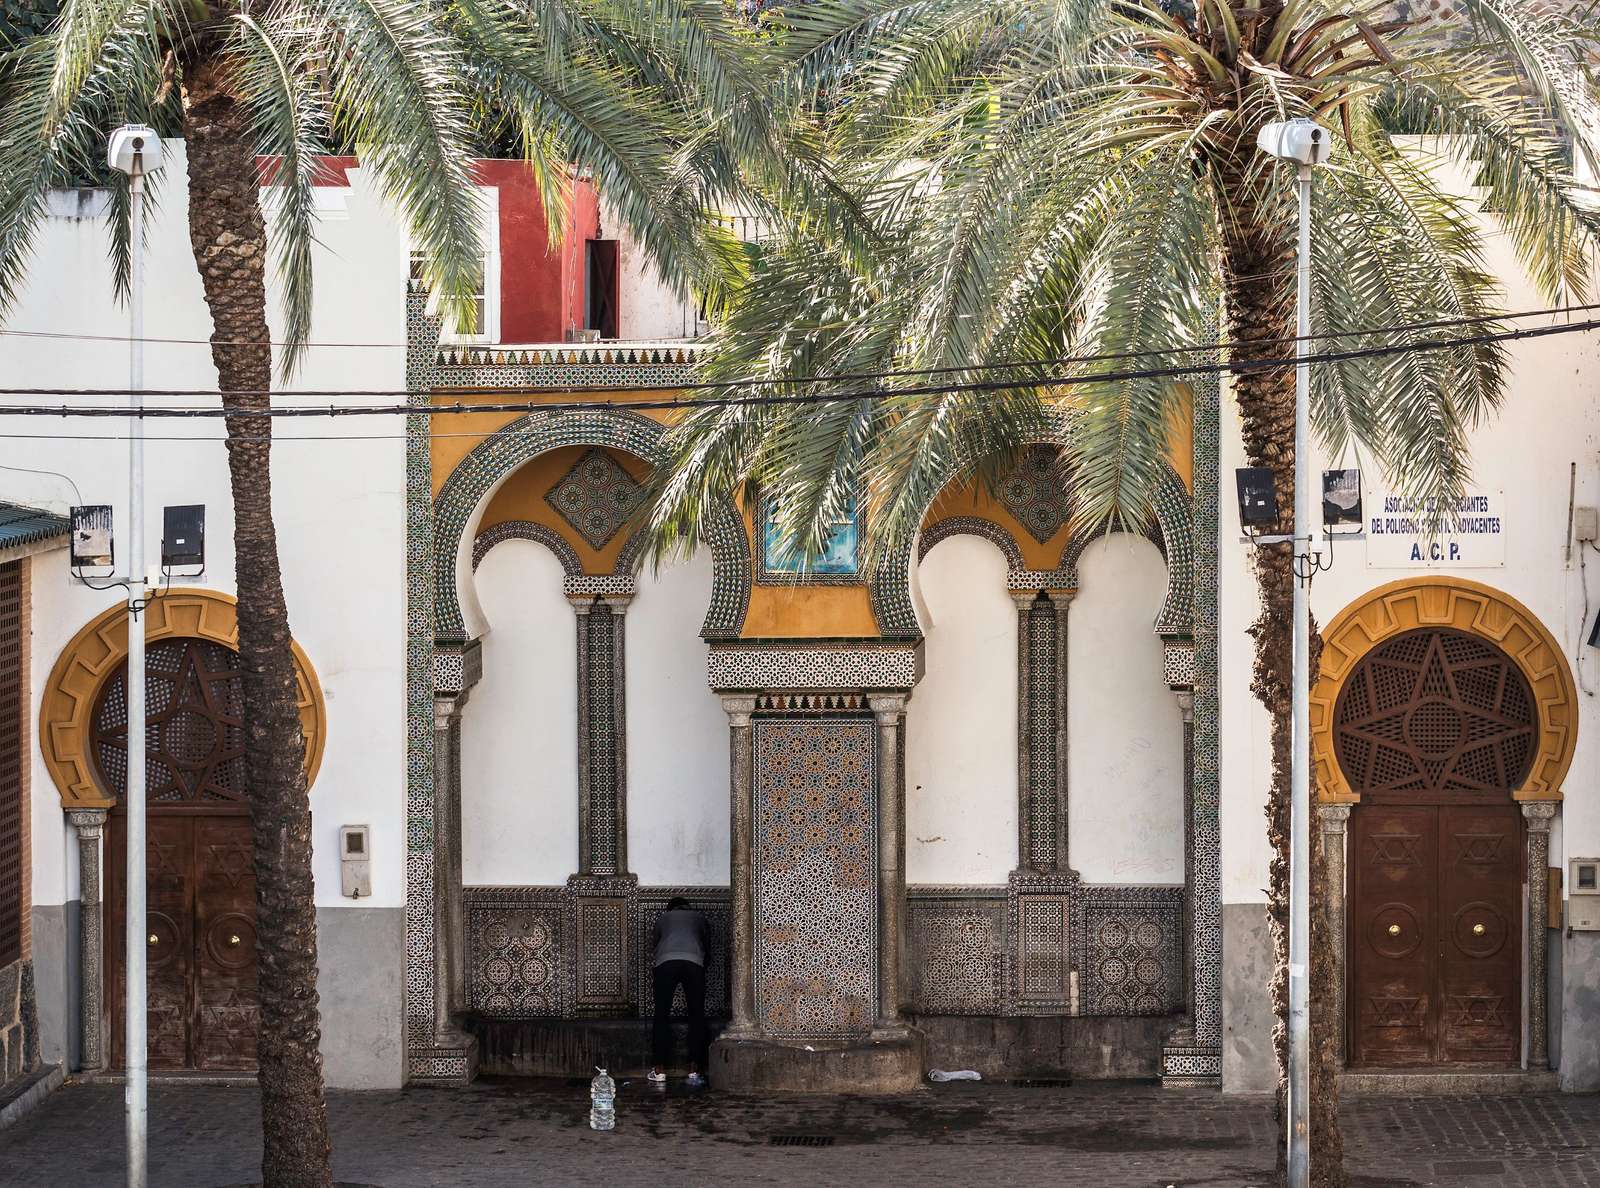 Мелилья в Марокко в Африке пазл онлайн